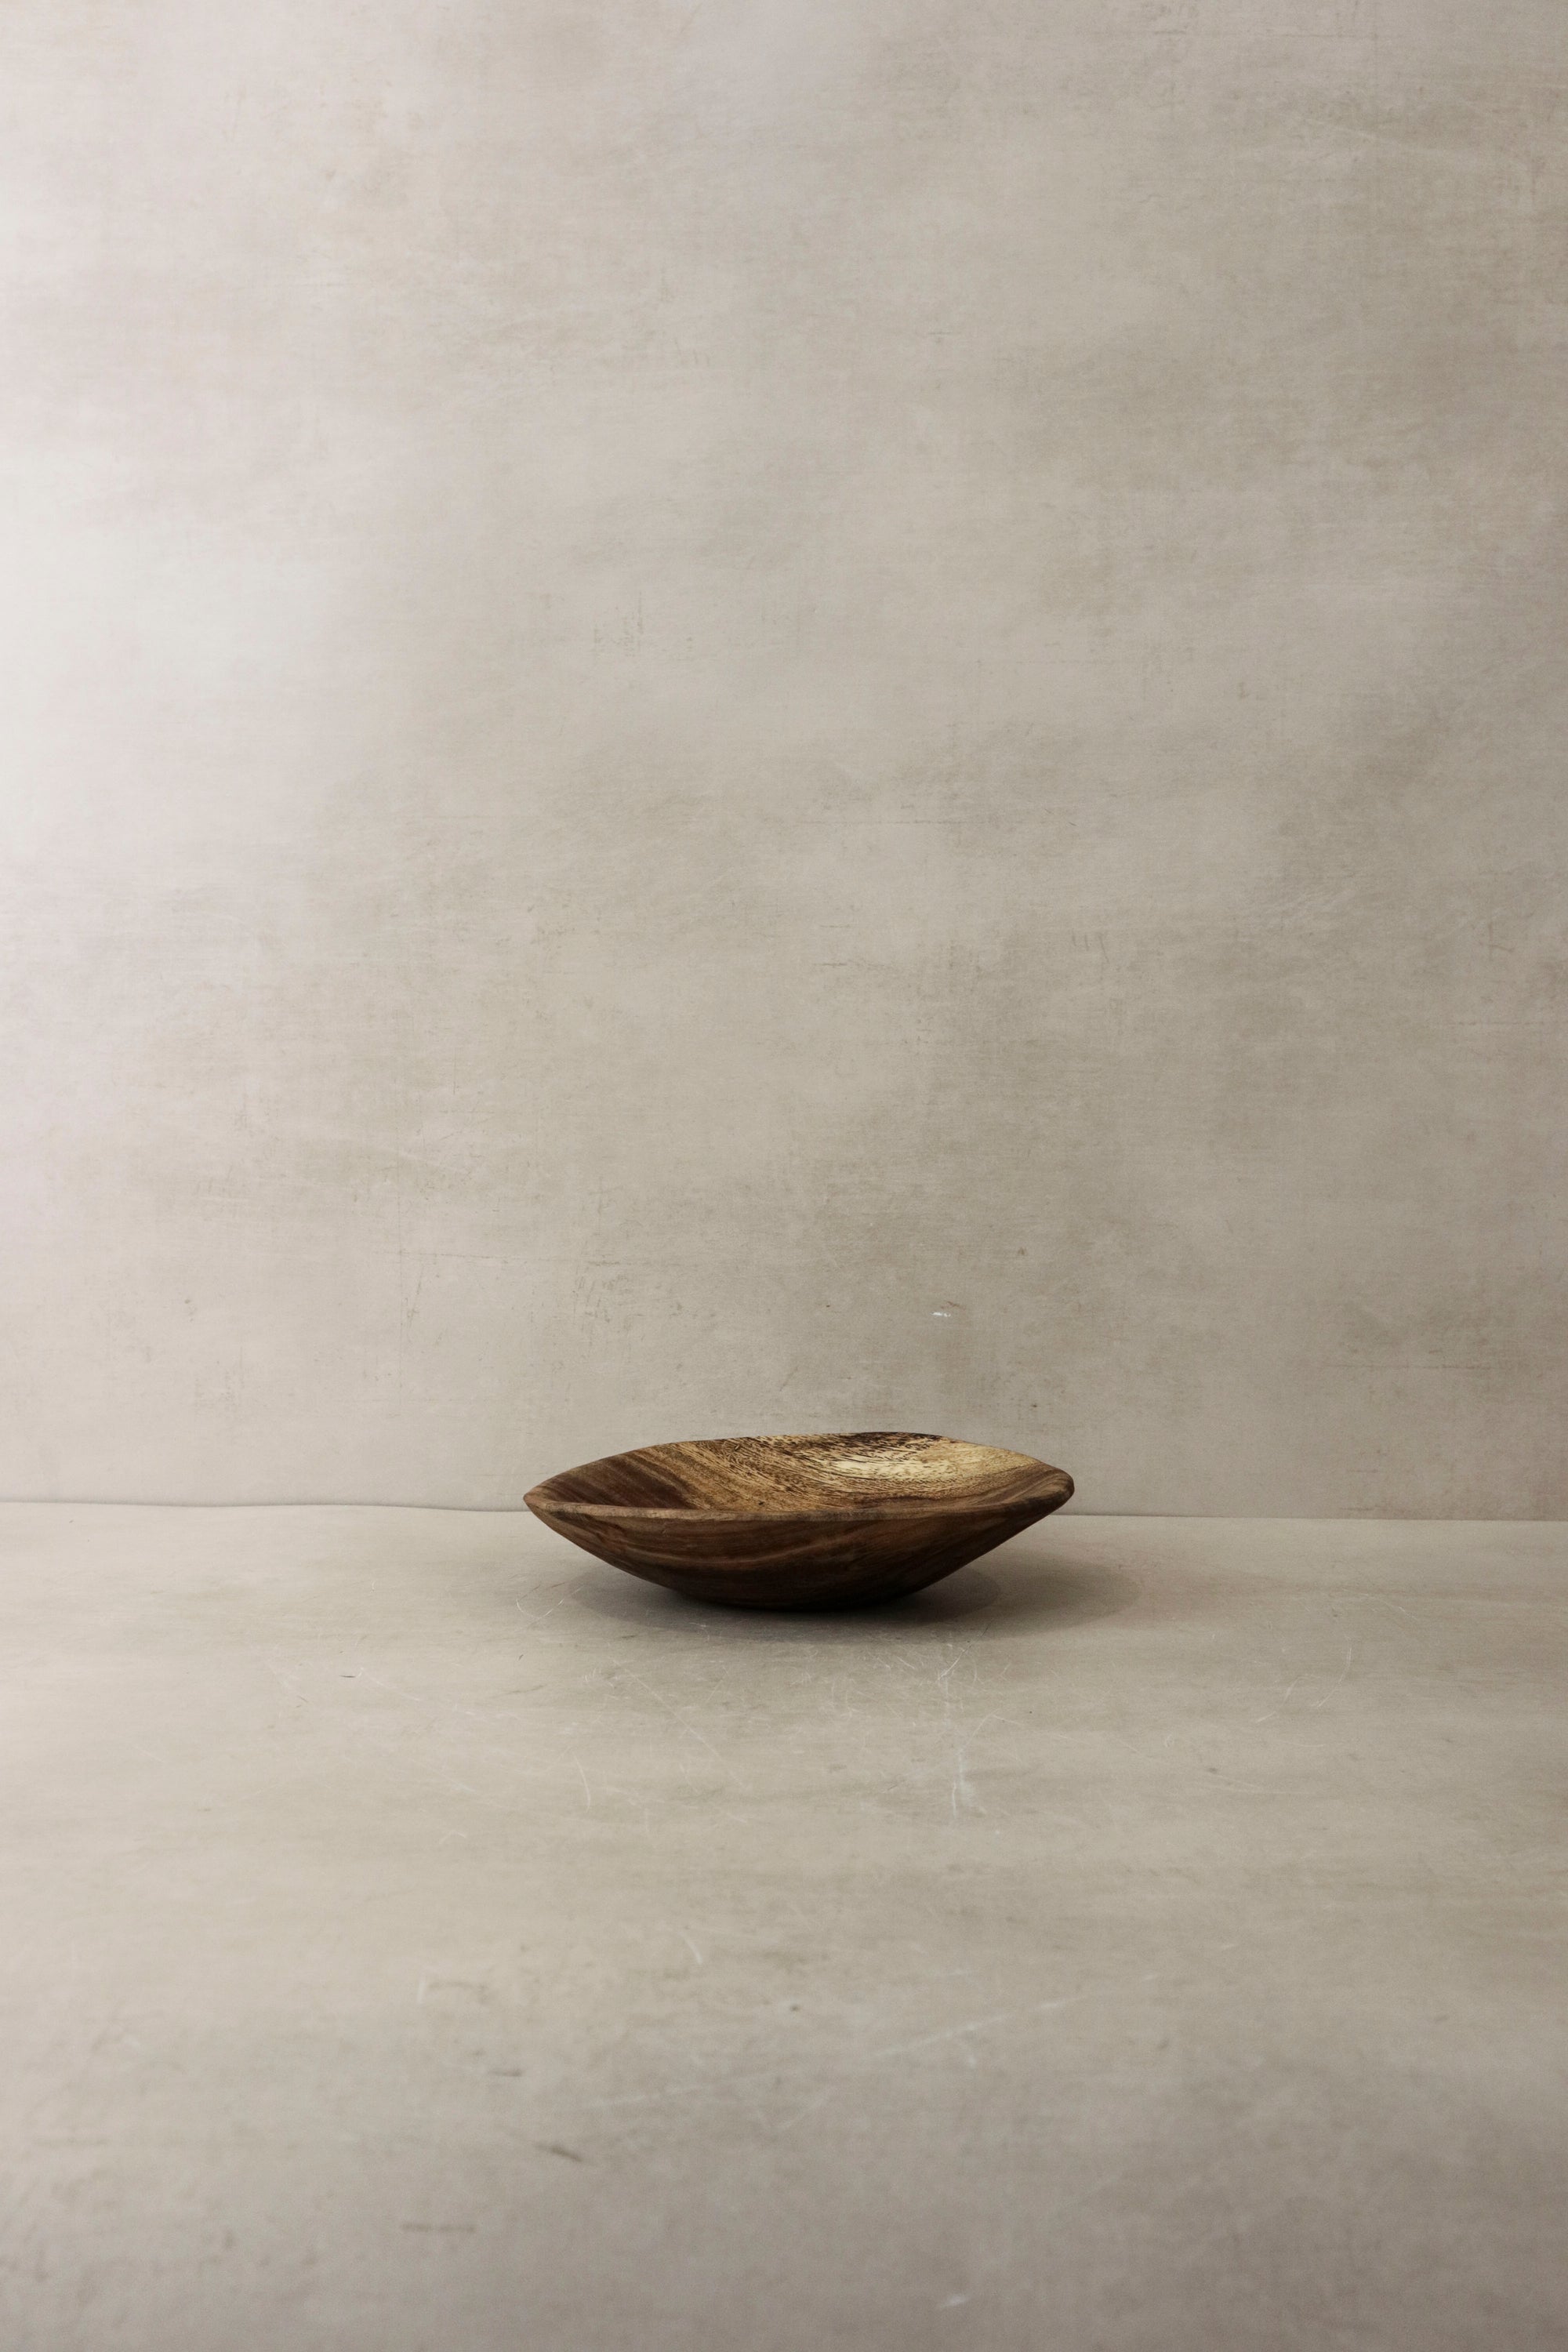 Handmade wooden bowl, Zimbabwe - 12.5